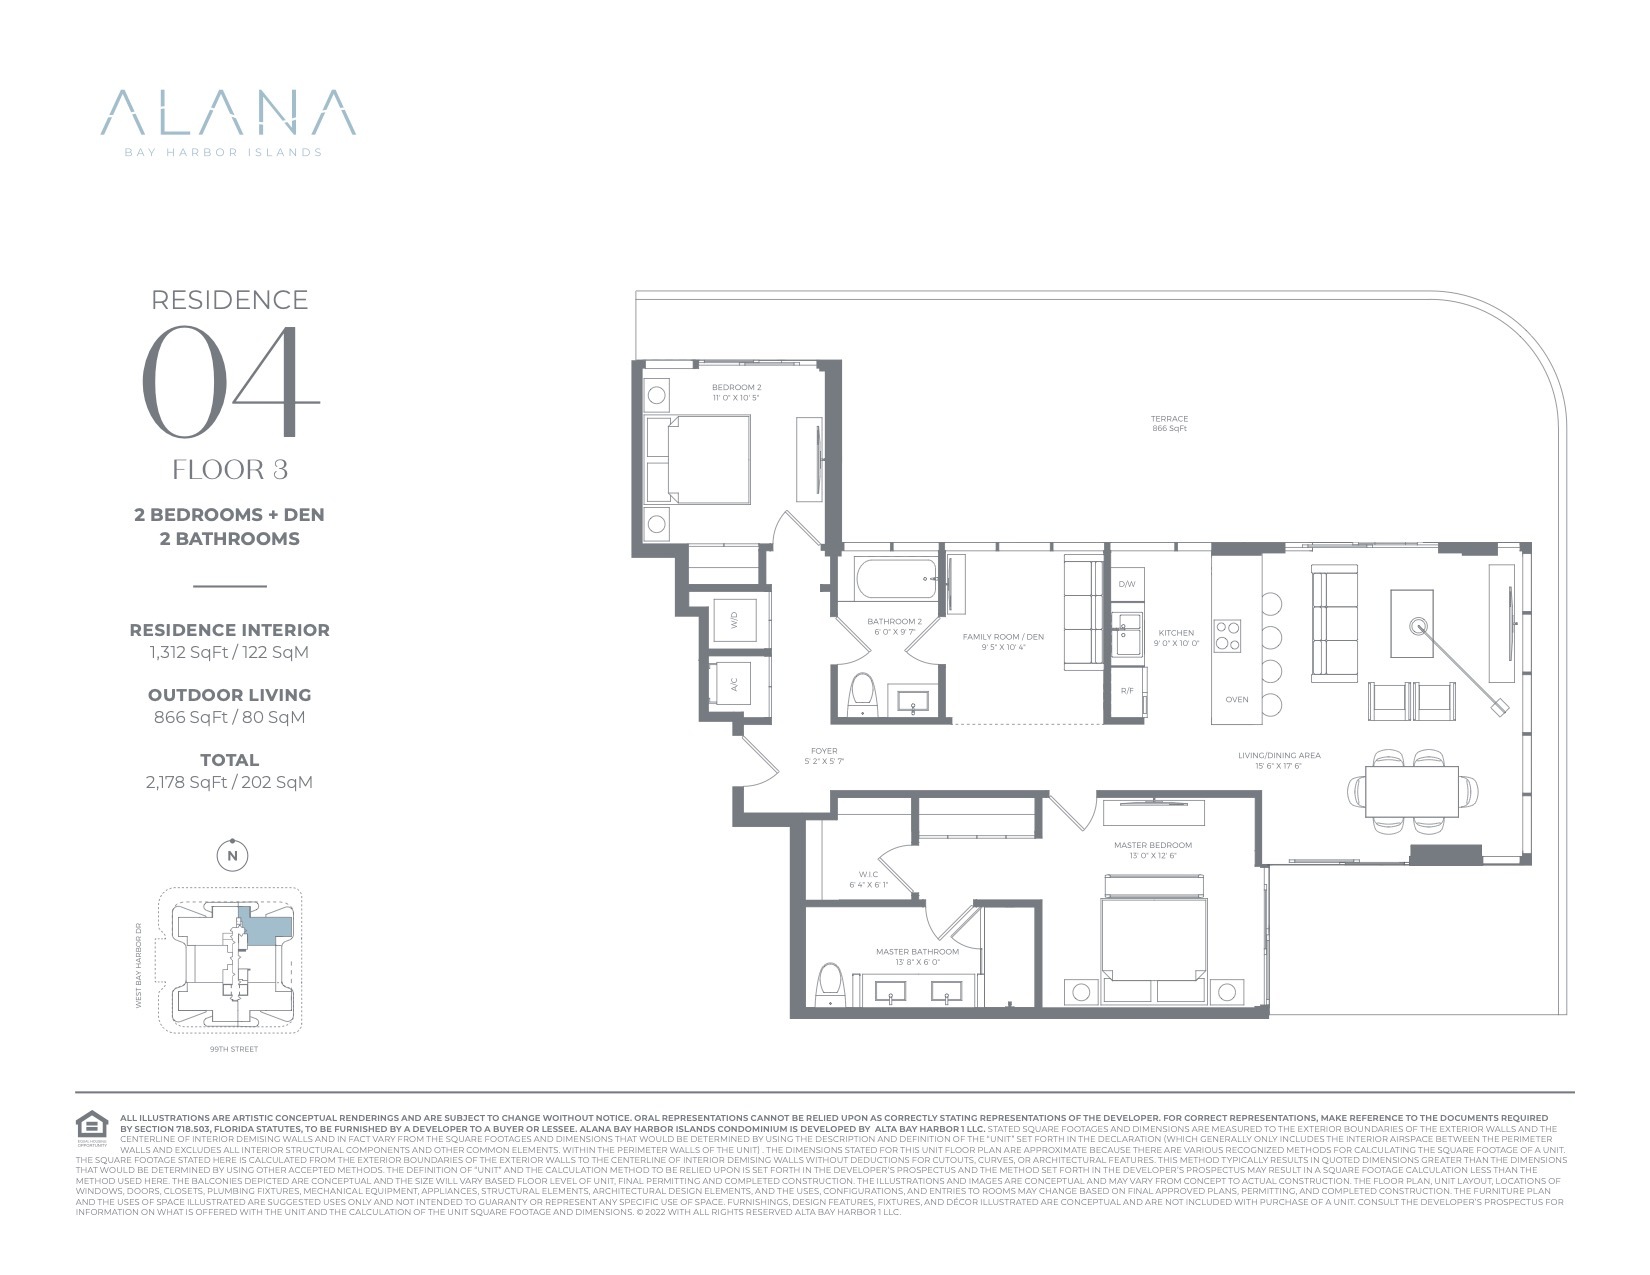 Floor Plan for Alana Bay Harbor Island Floorplans, Residence 04